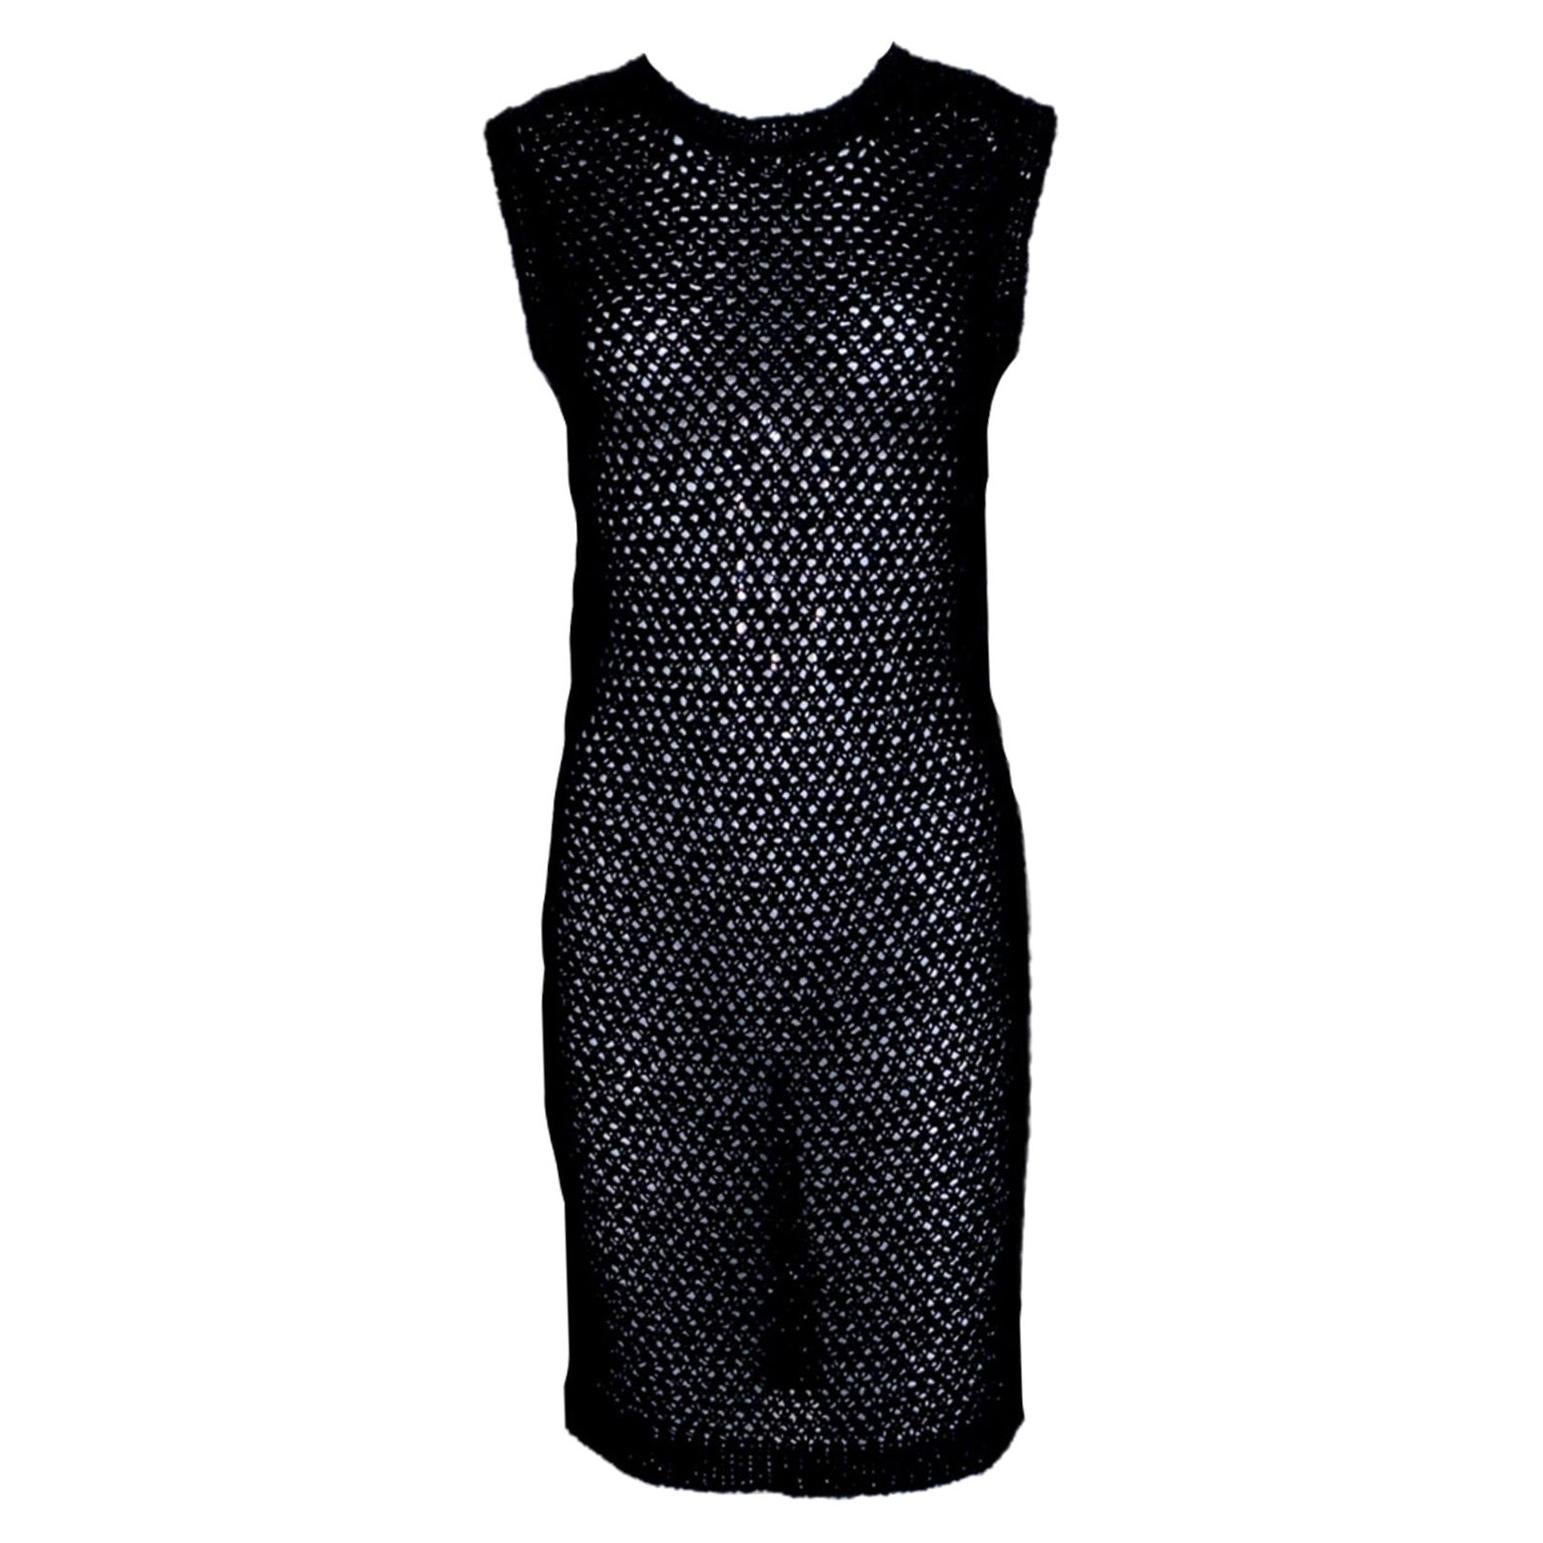 NEW Chanel Black Crochet Knit Dress including Slip Dress 38 For Sale